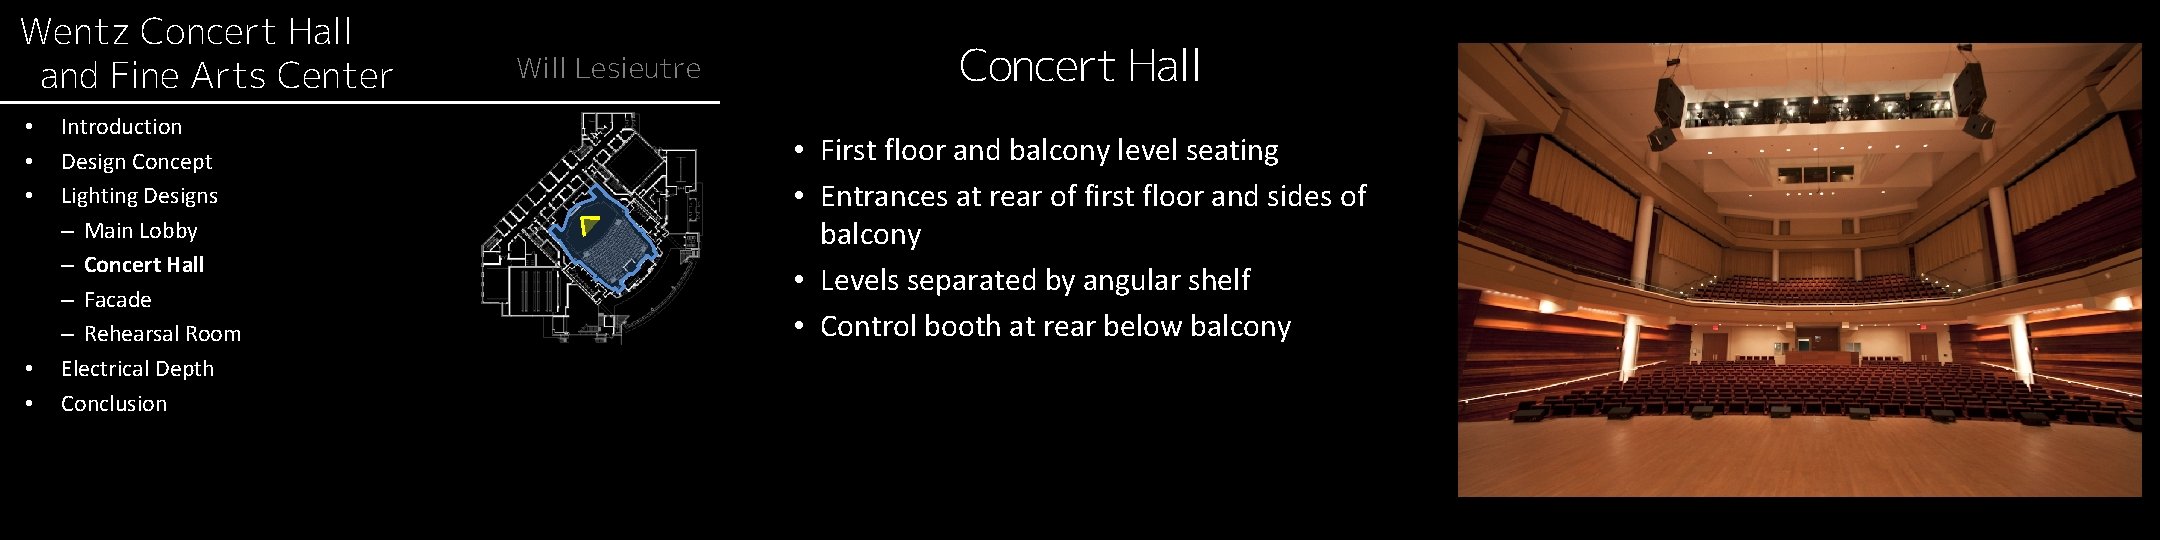 Wentz Concert Hall and Fine Arts Center • • • Introduction Design Concept Lighting